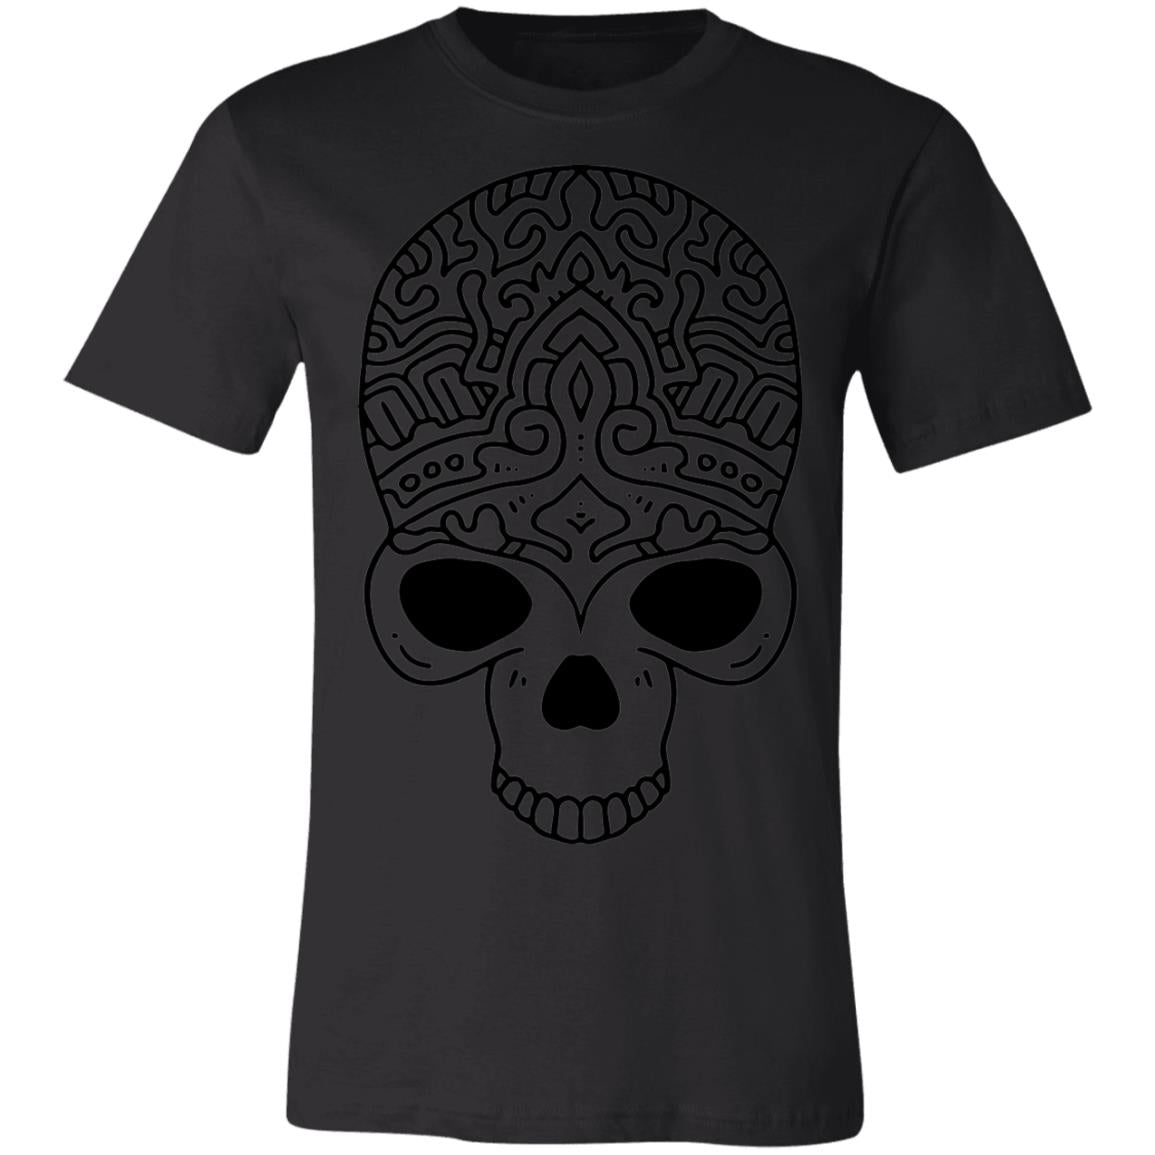 Skull 69 Santa Muerte Shirt-Express Your Love Gifts